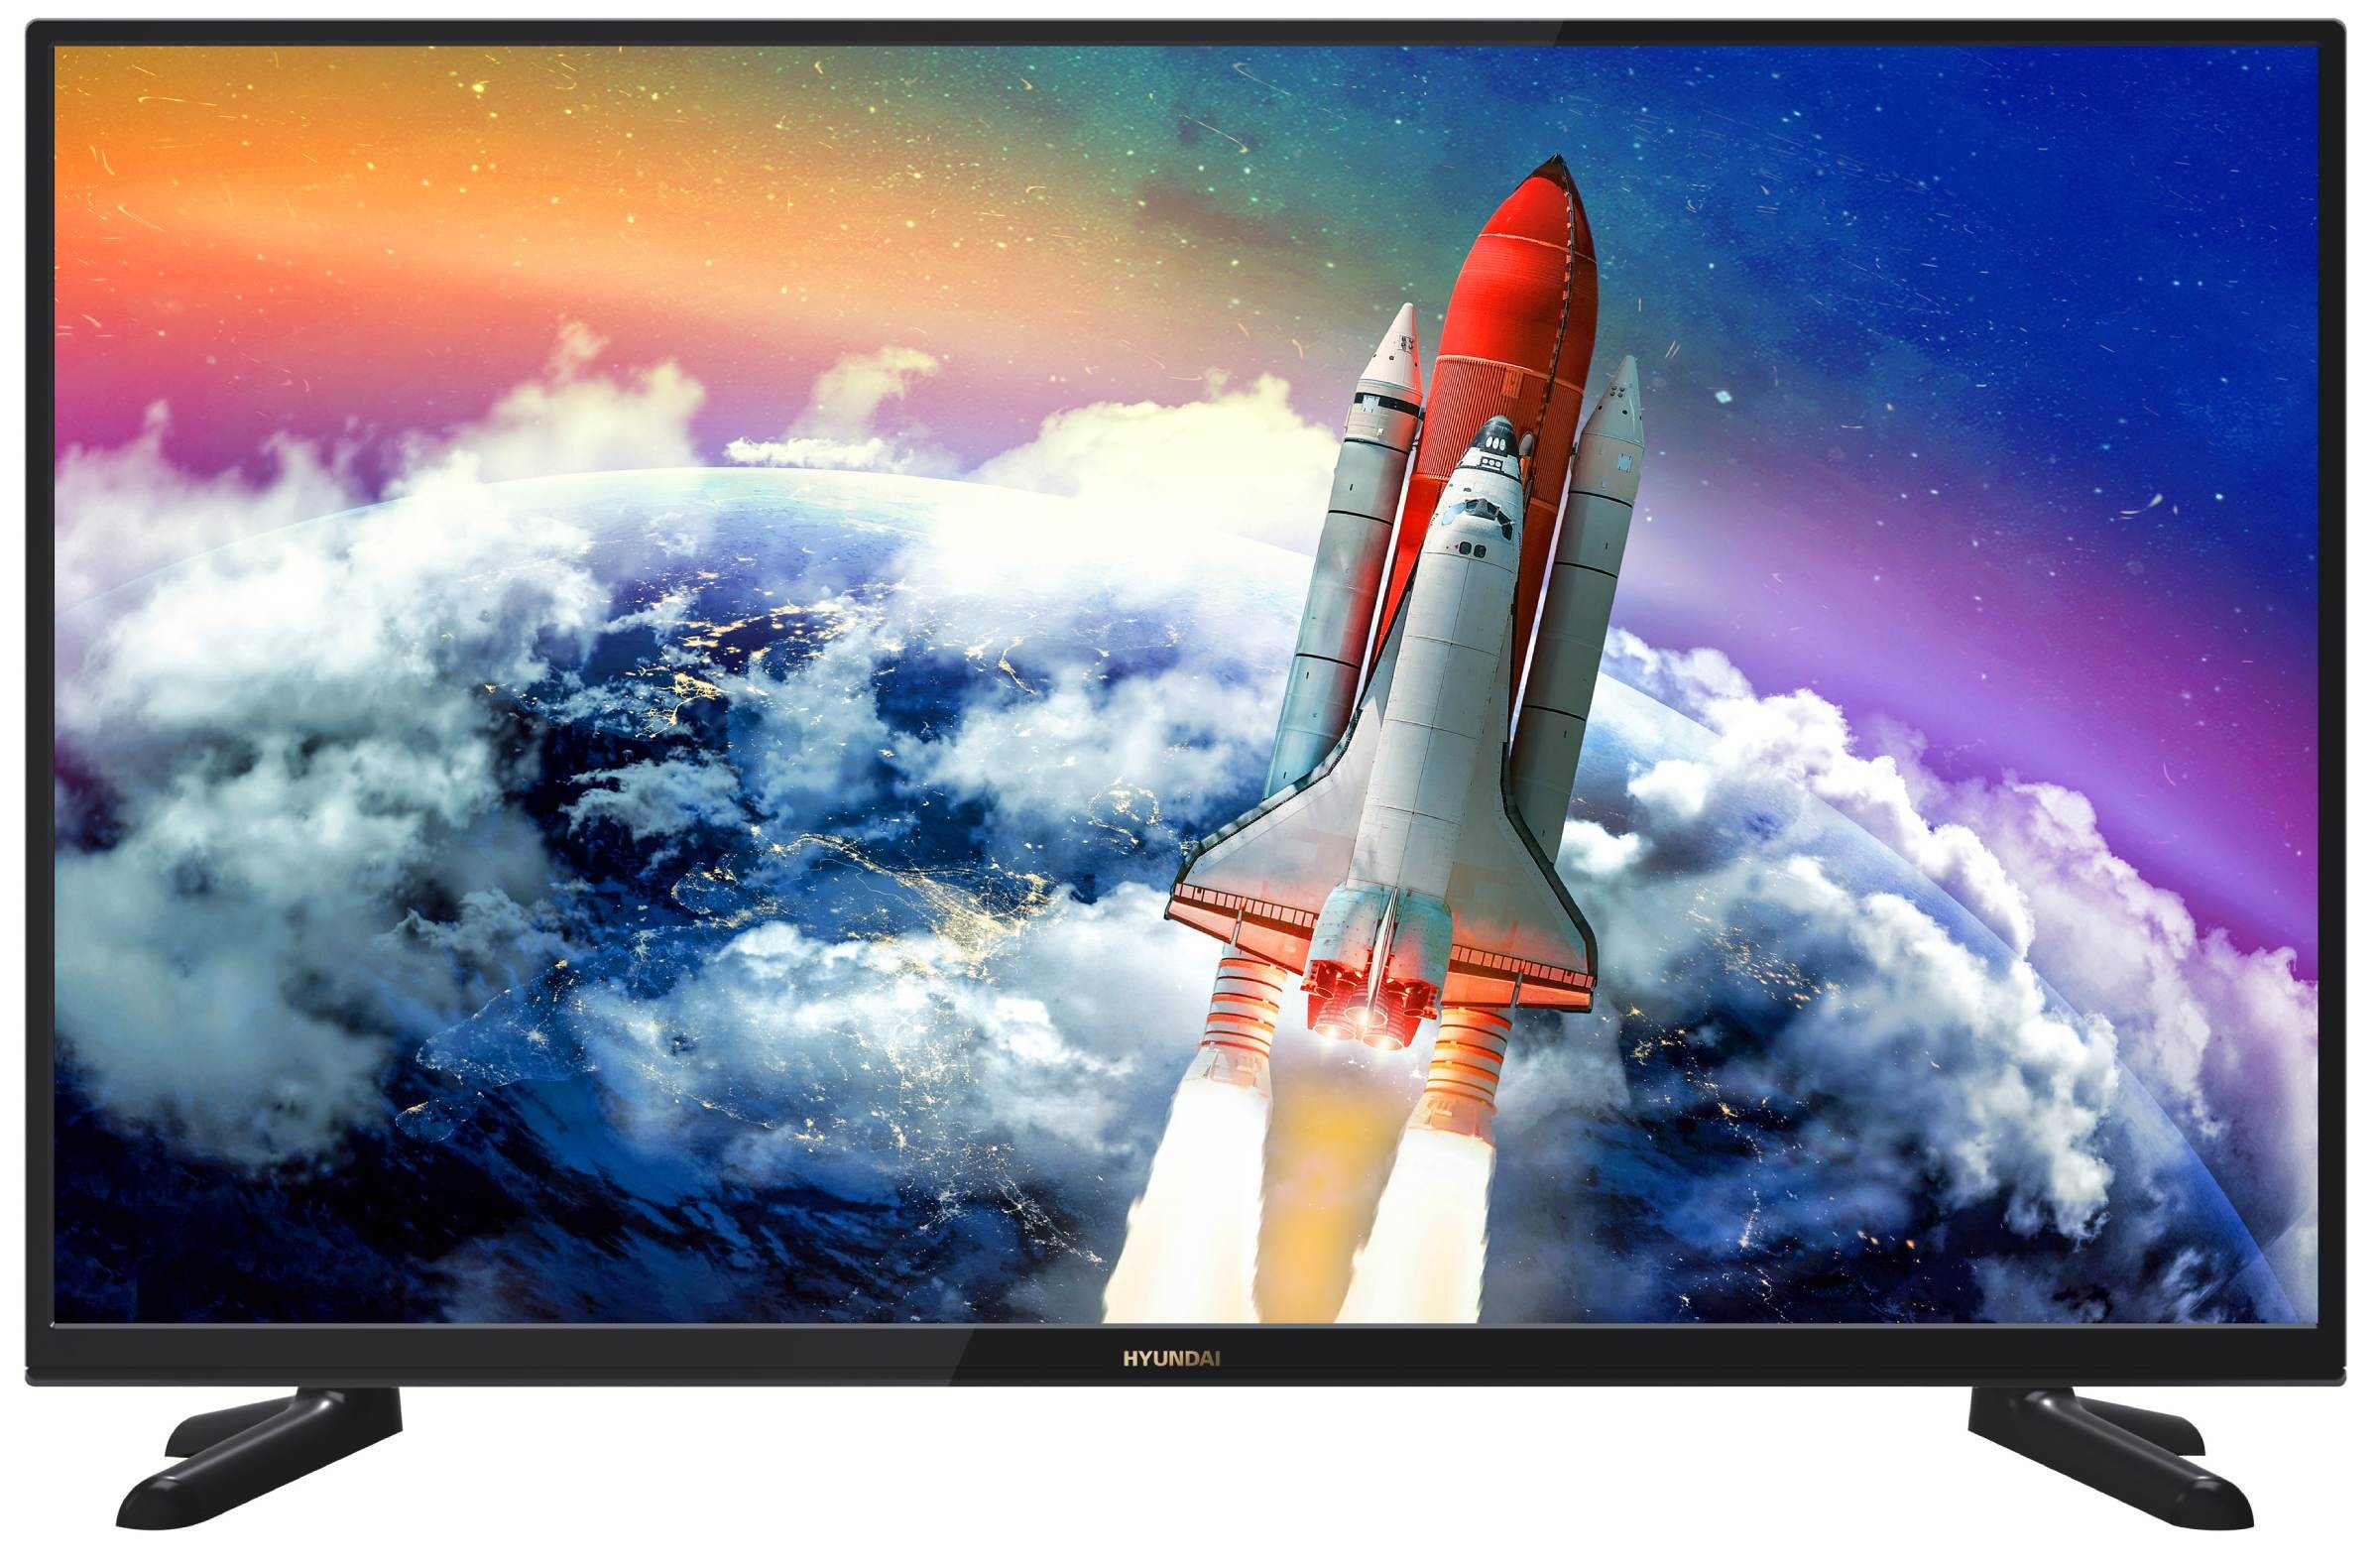 HYUNDAI TV LED Full HD 105 cm  - HY-TQL42FHD-001